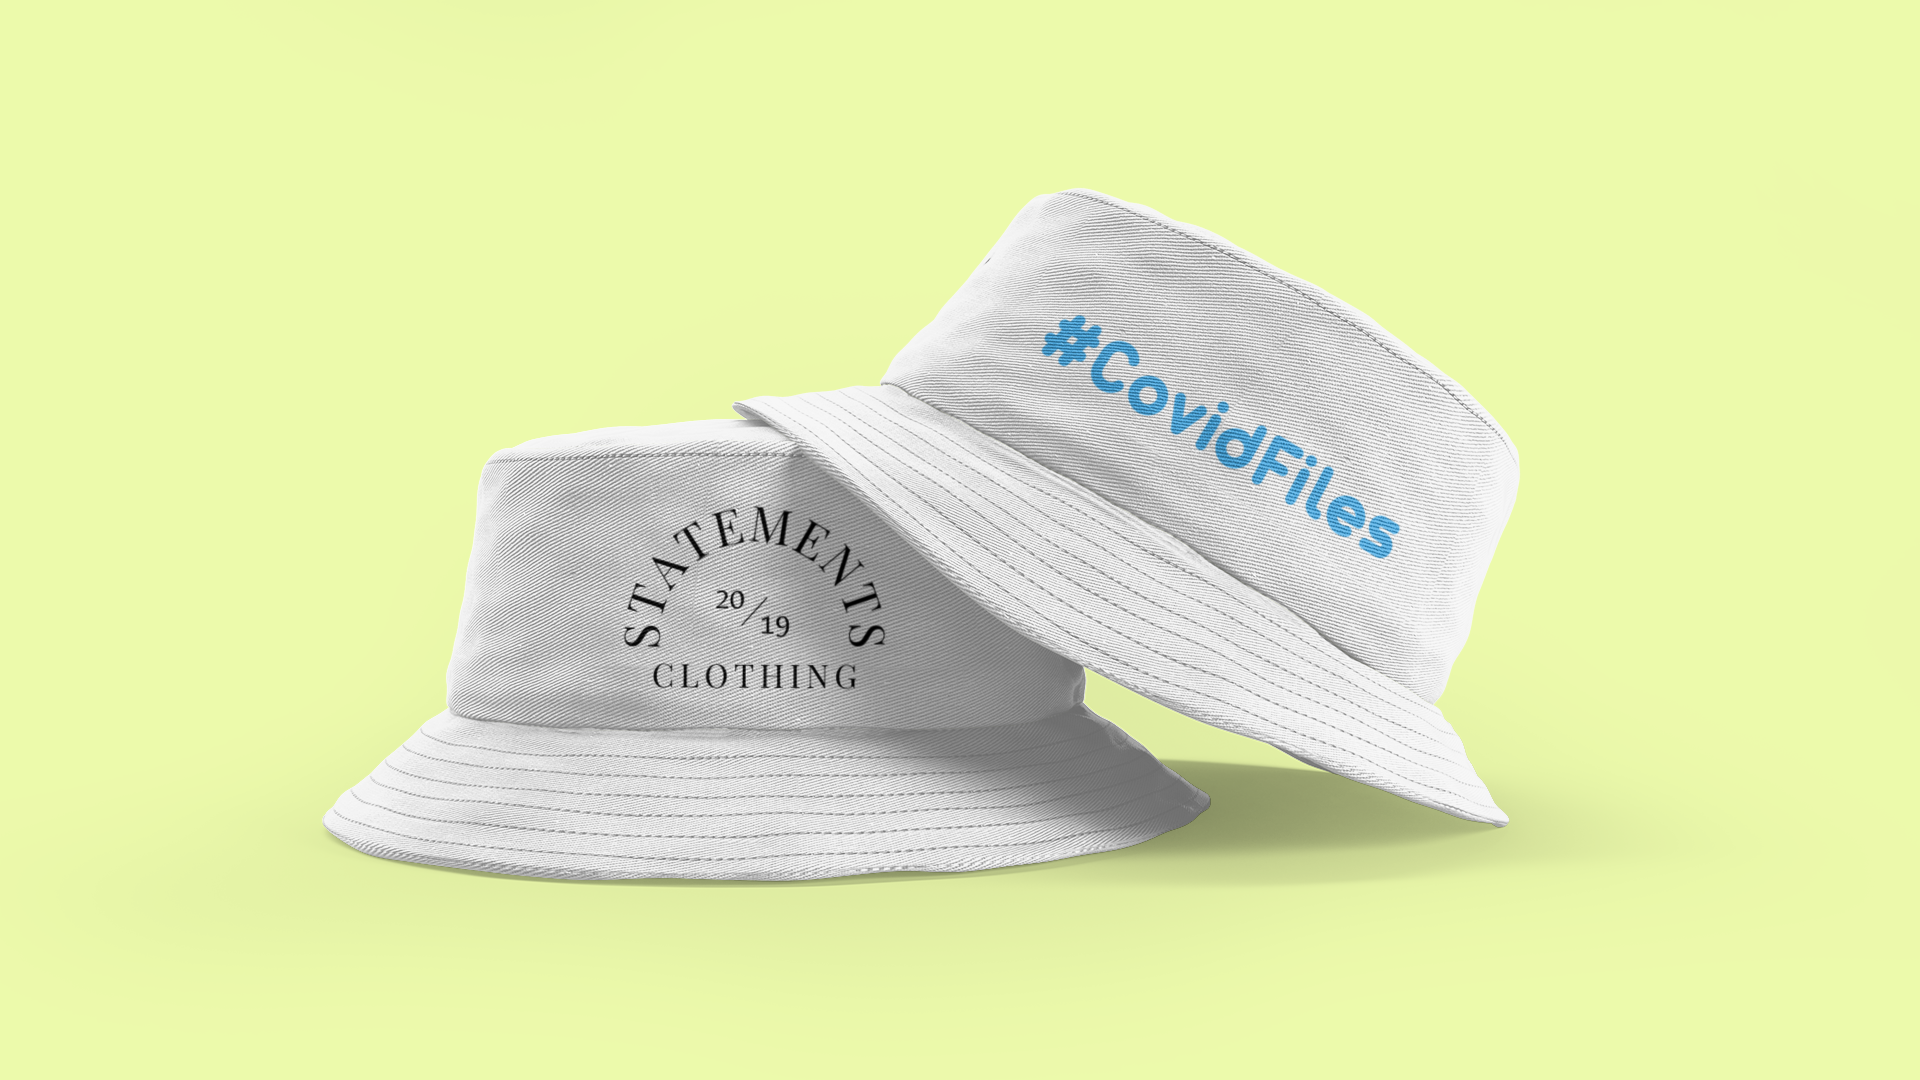 #CovidFiles Bucket Hat